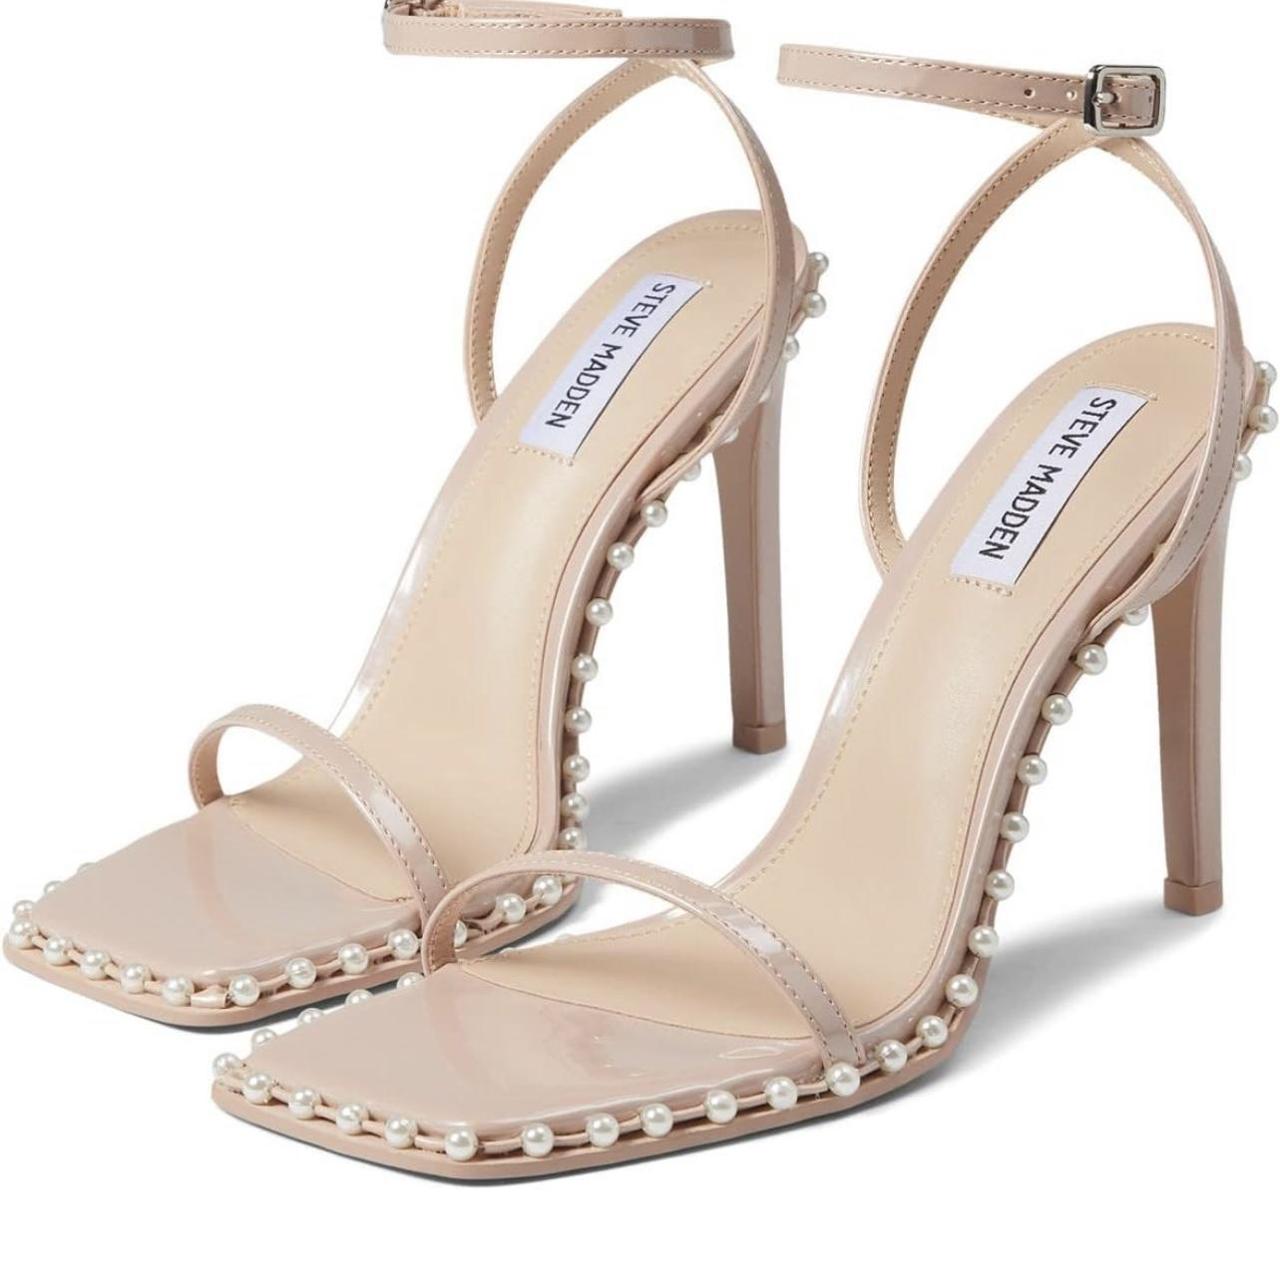 Steve Madden Zelle heels in blush patent US10 with... - Depop